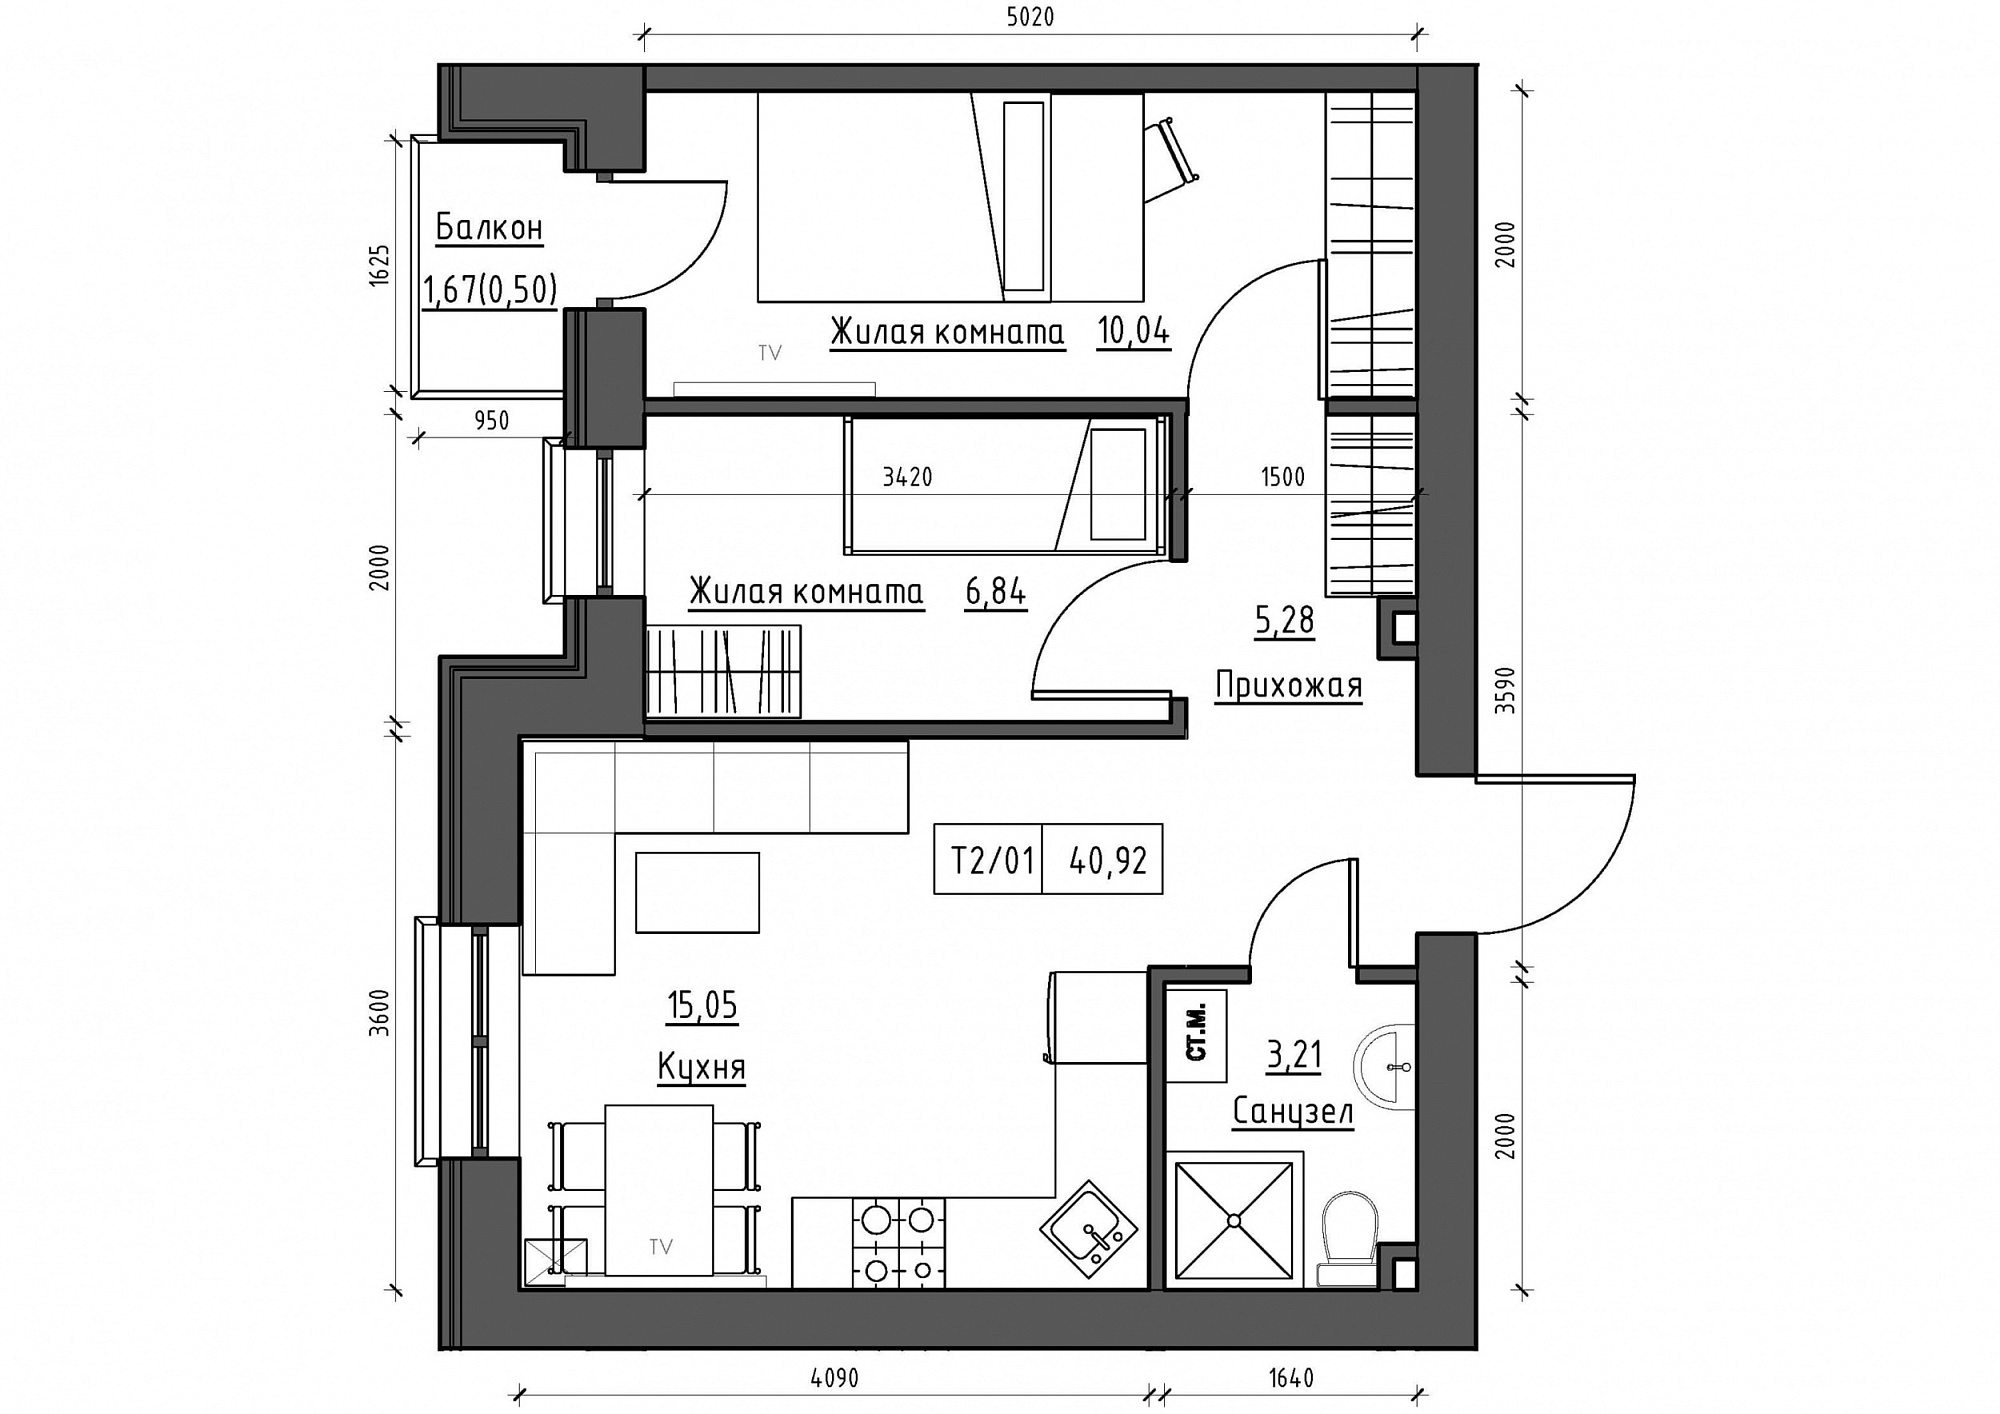 Planning 2-rm flats area 40.92m2, KS-012-04/0010.